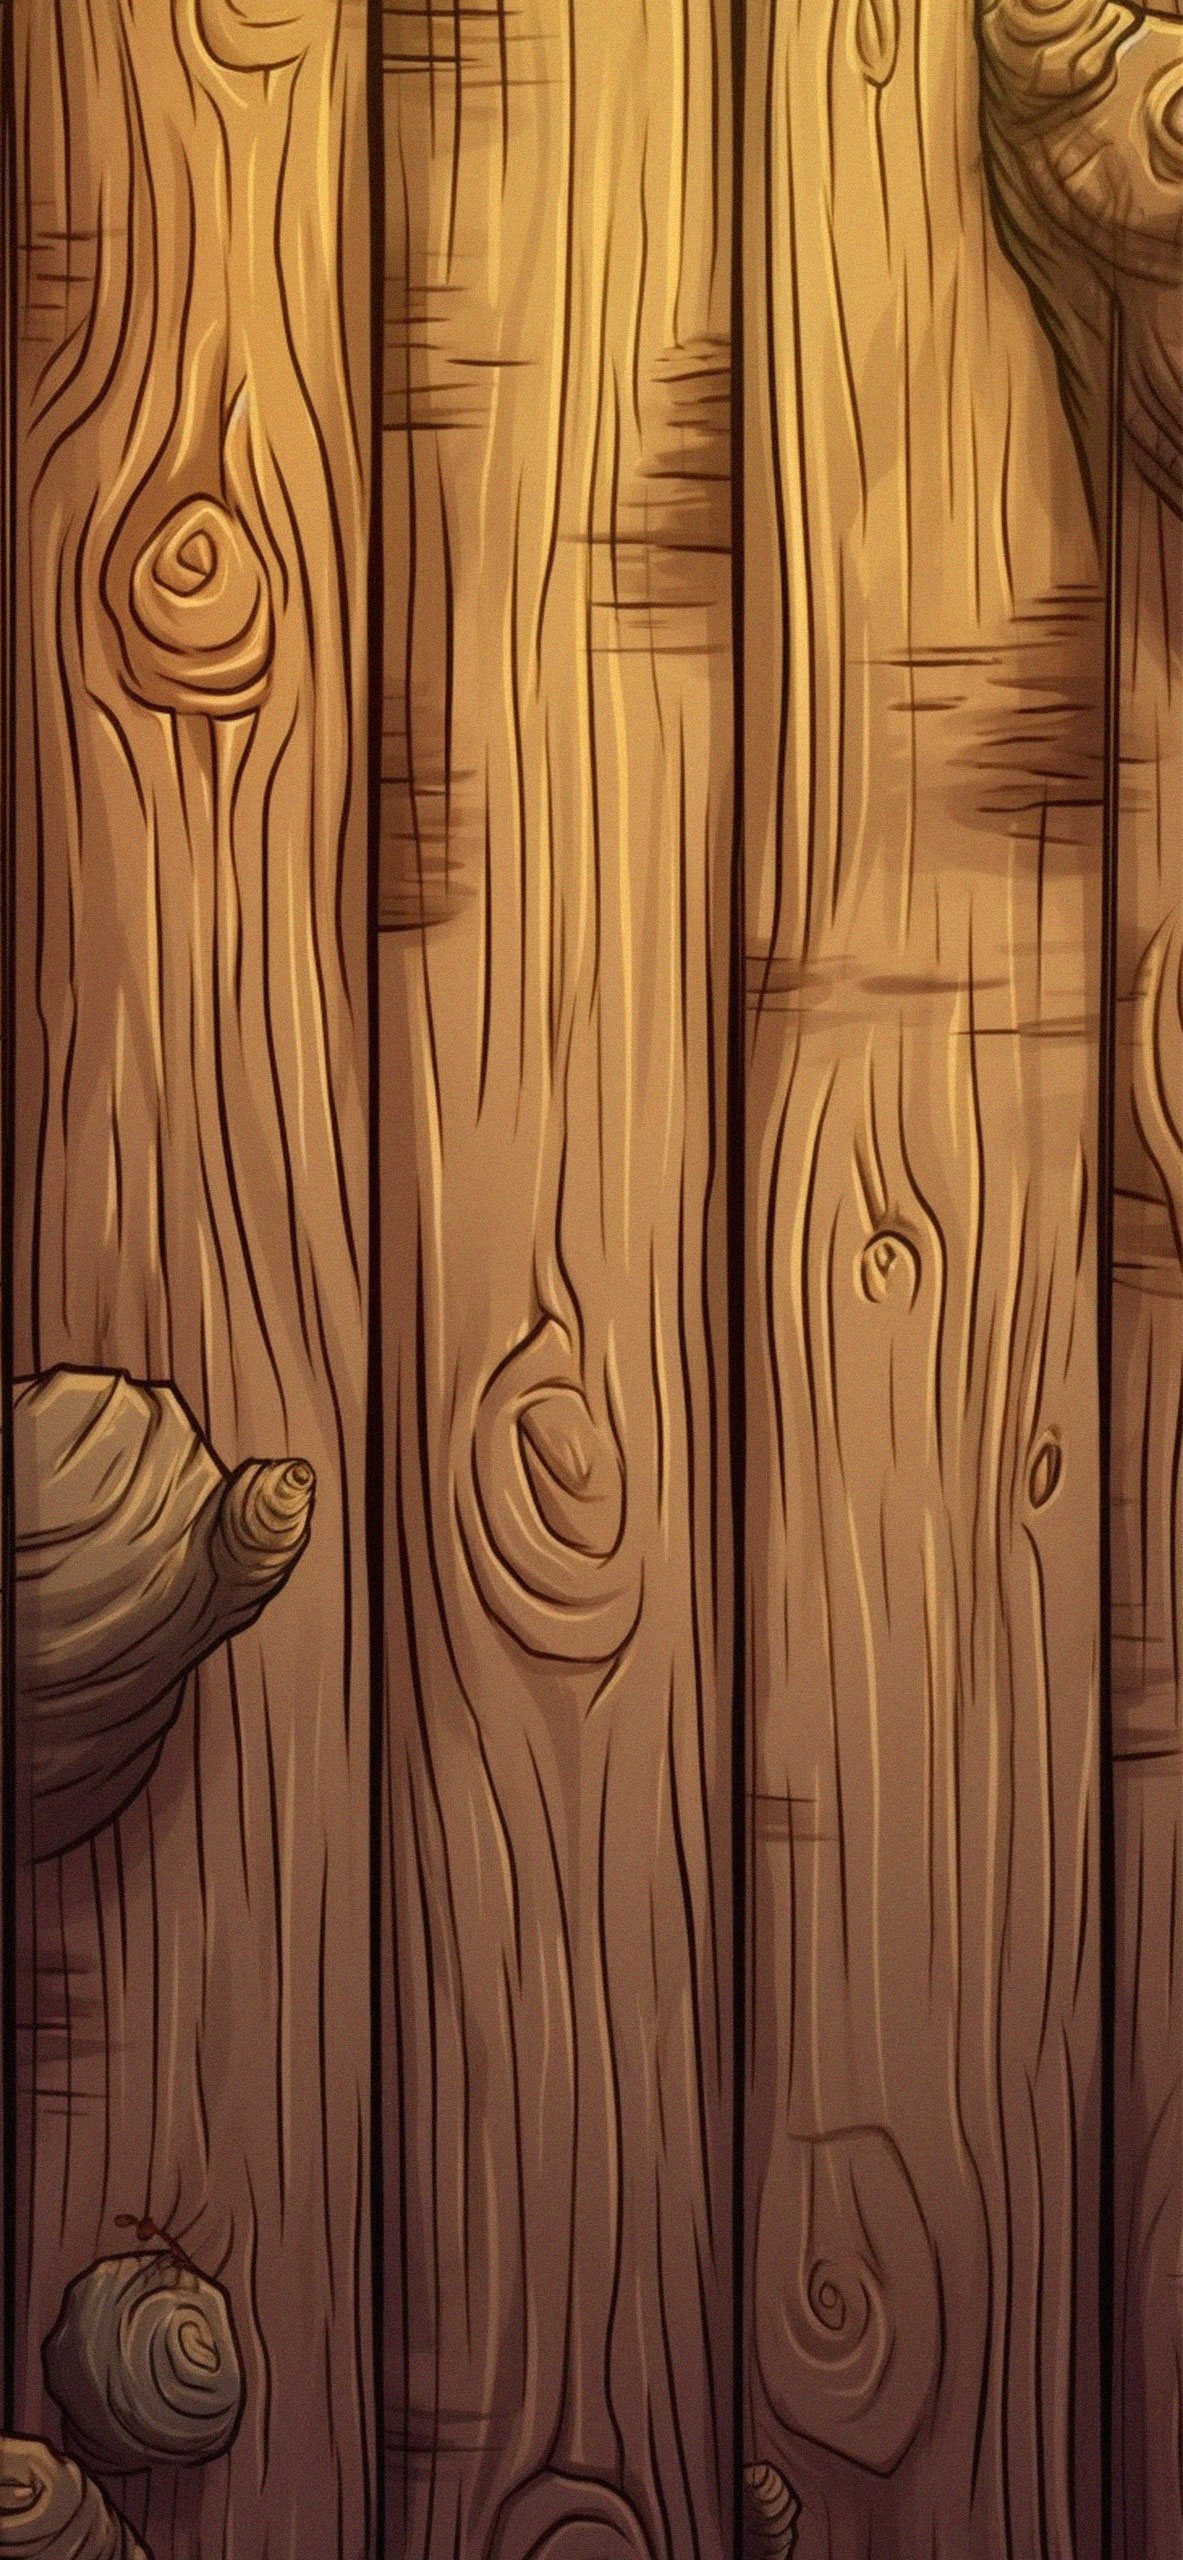 Wooden pattern cartoon wallpaper Cool wooden pattern wallpaper